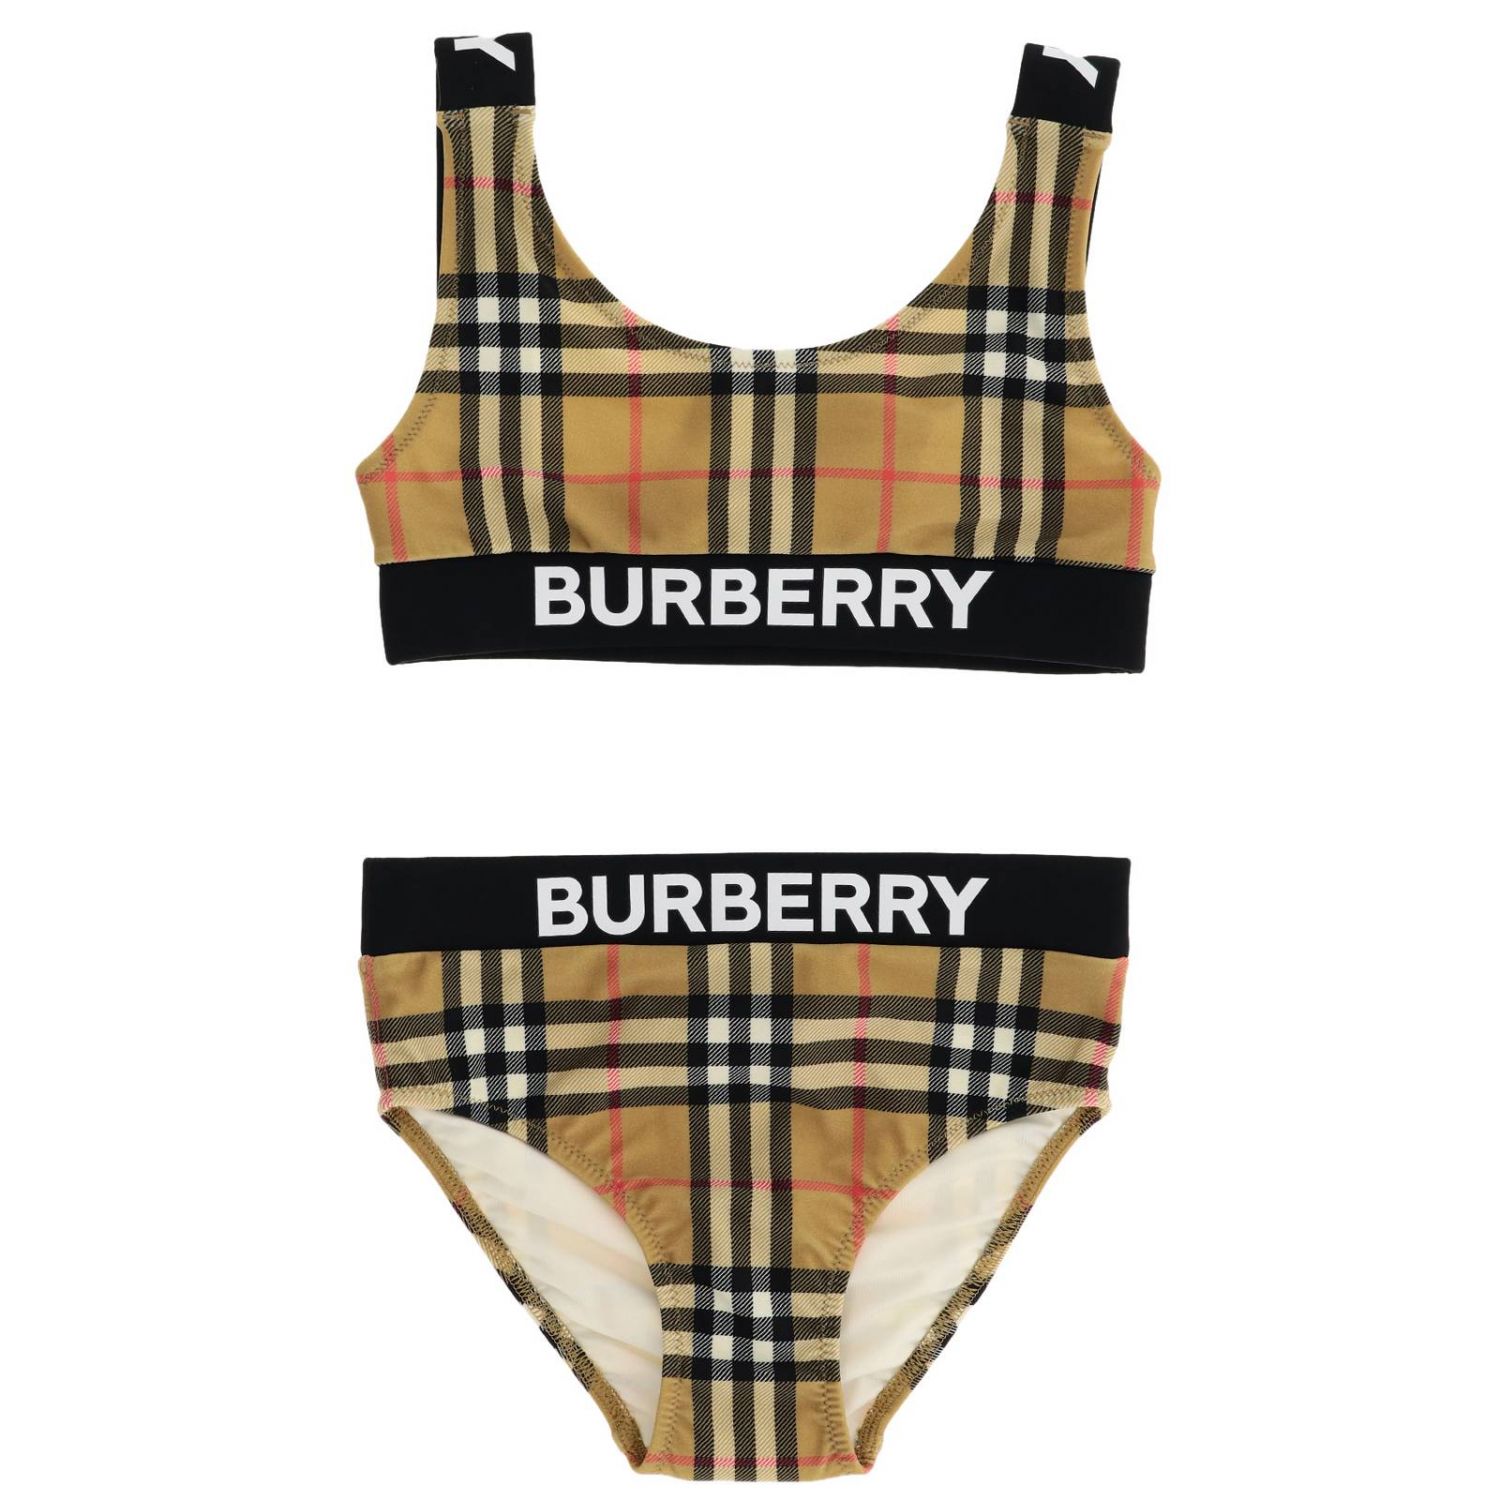 burberry swimsuit kids price